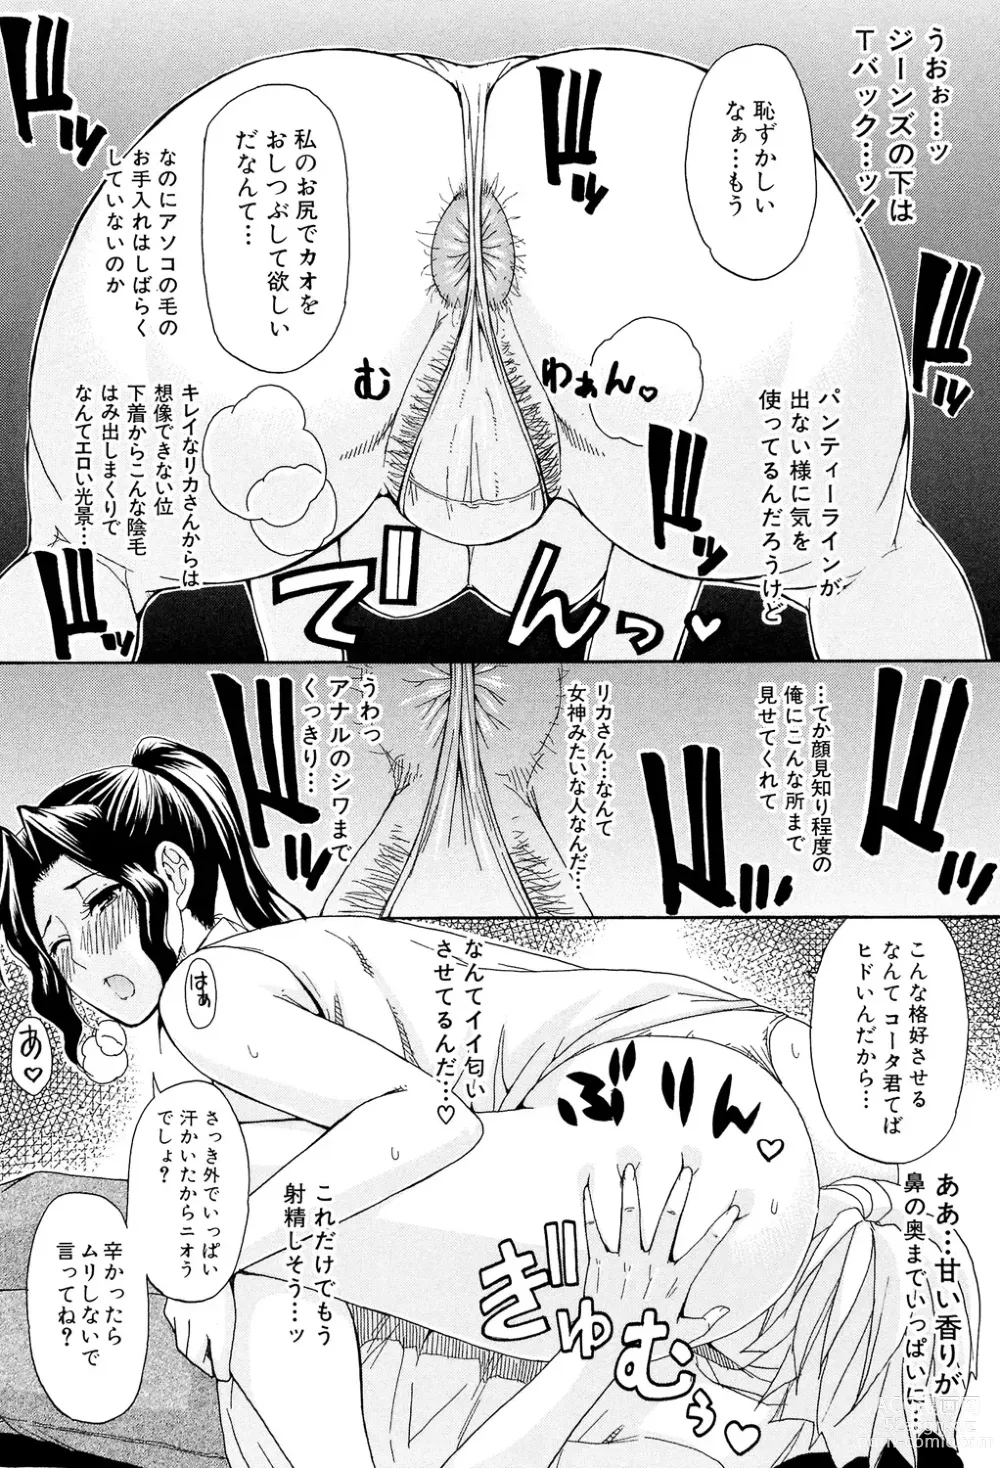 Page 196 of manga Hitokoishi, Tsuma